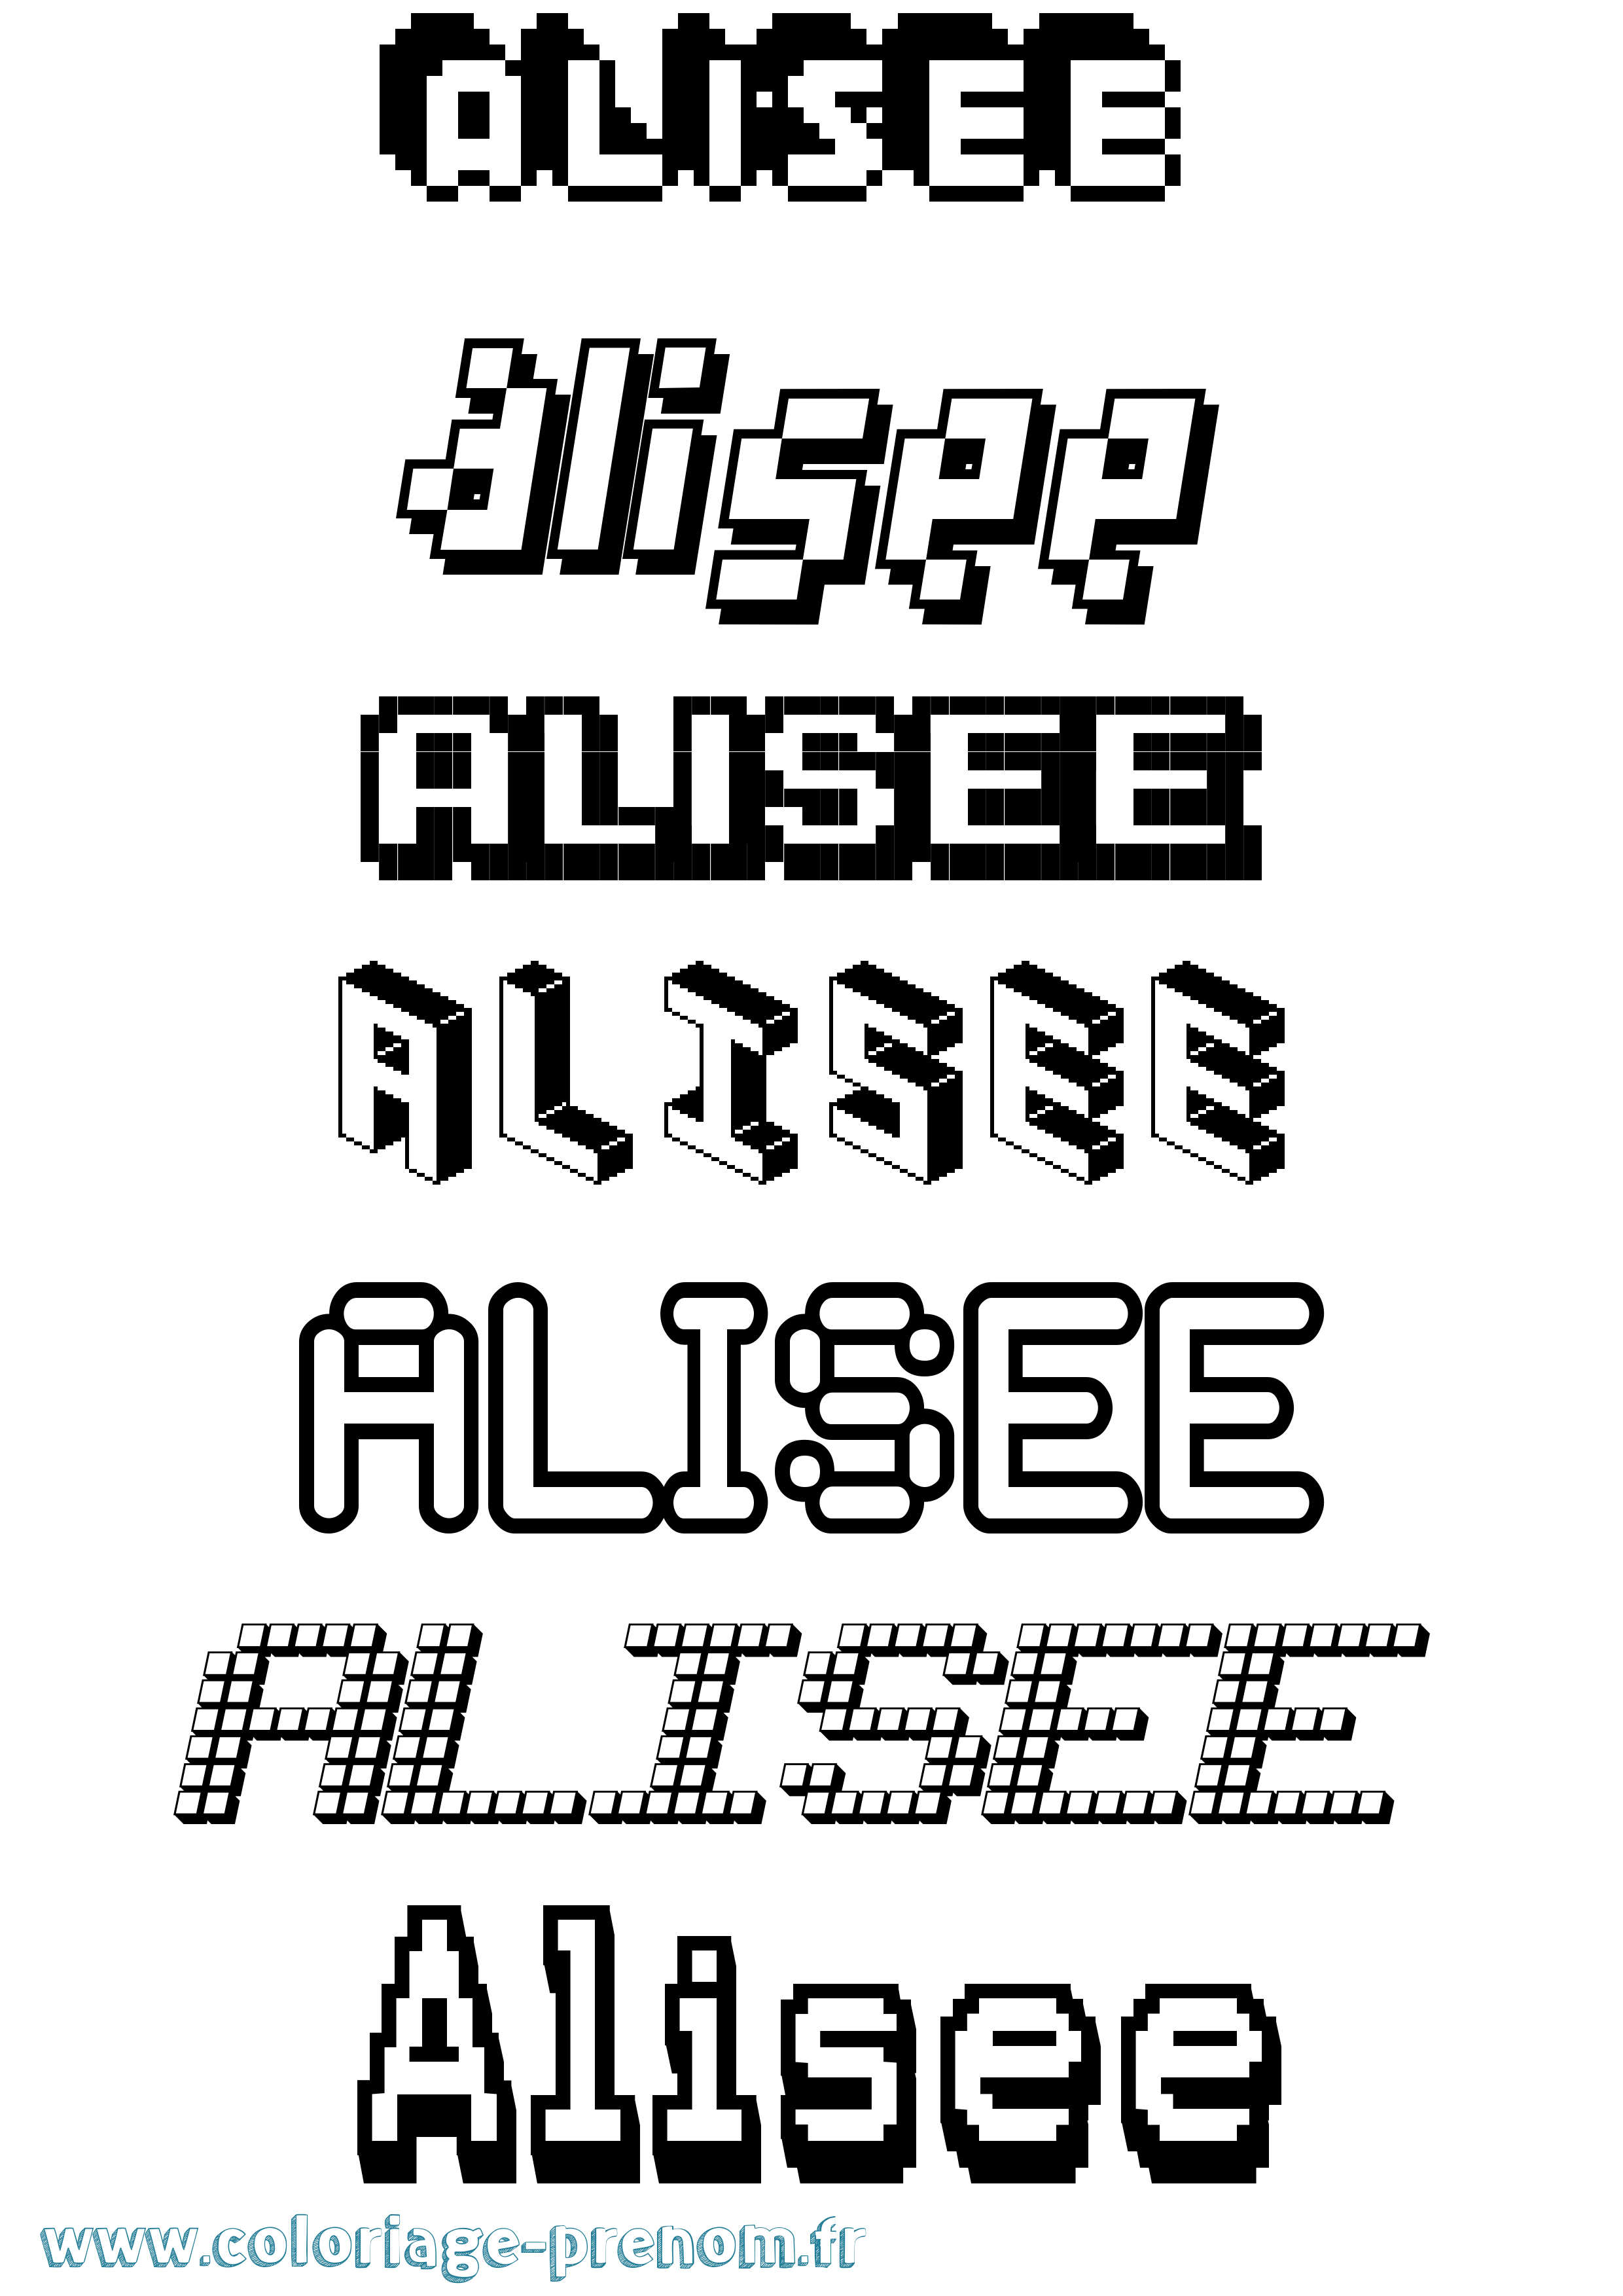 Coloriage prénom Alisee Pixel